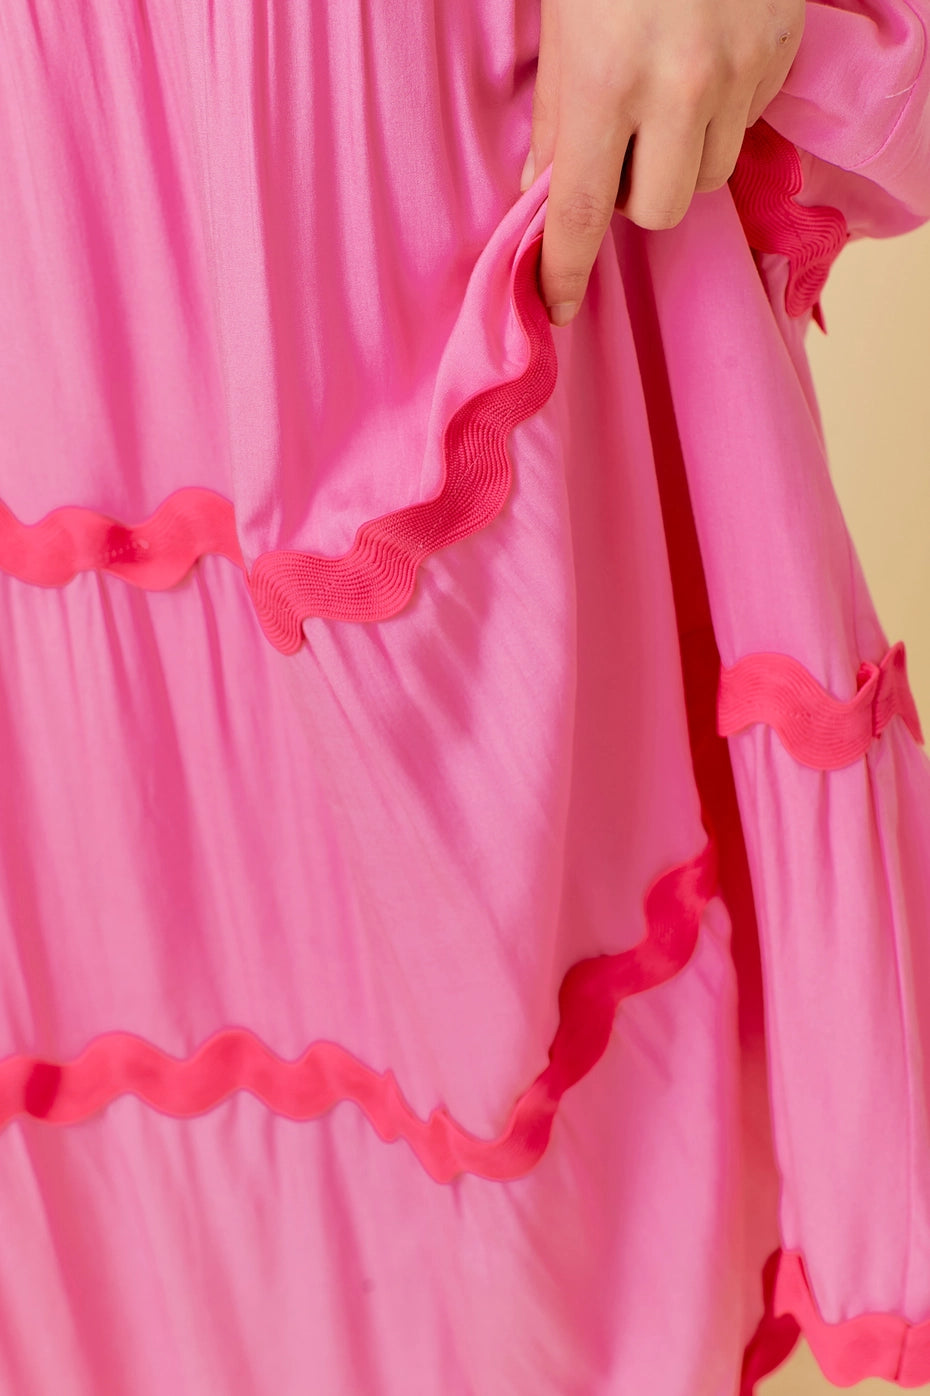 Ric Rac Trim Maxi Dress - Pink